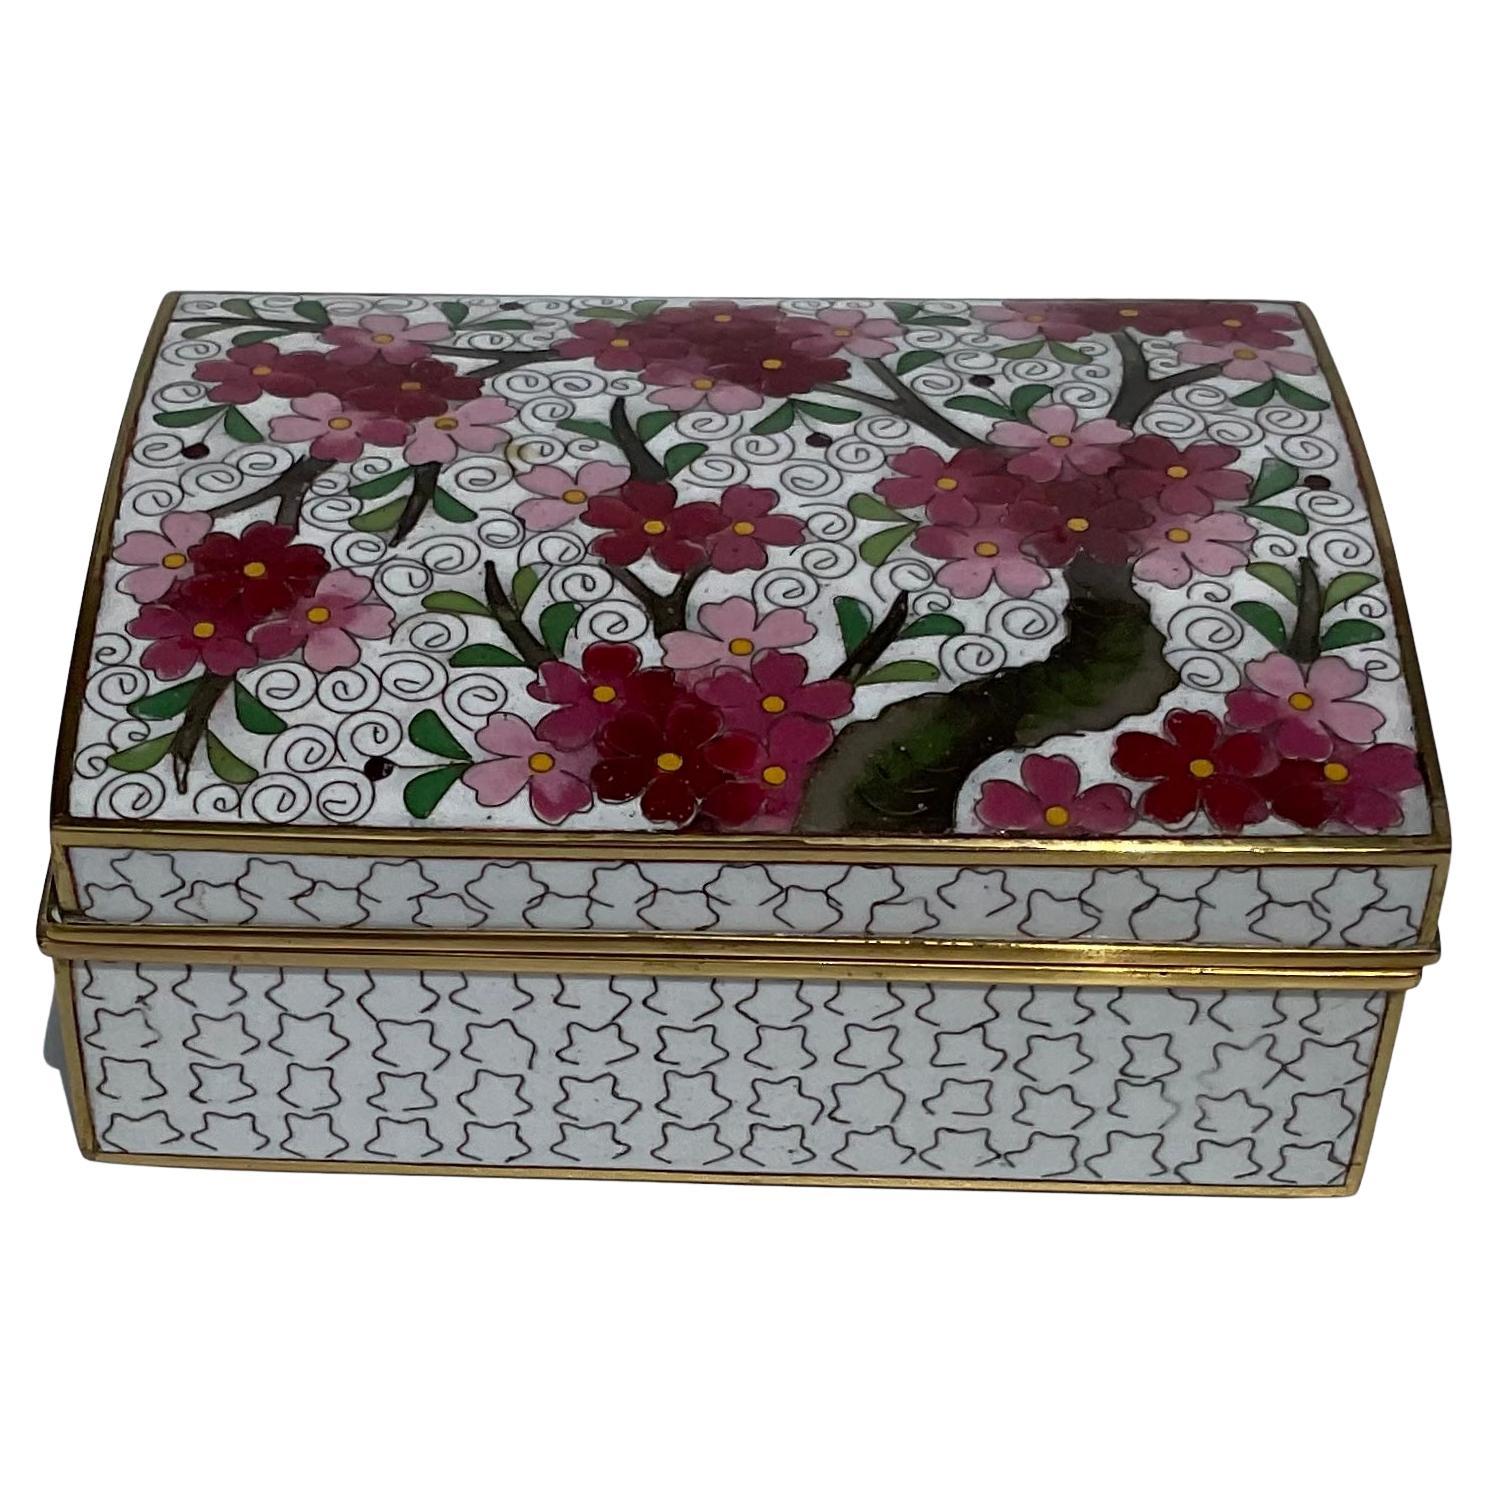 Ando Signed Japanese Flowering Tree Box Cloisonne with Amazing Design